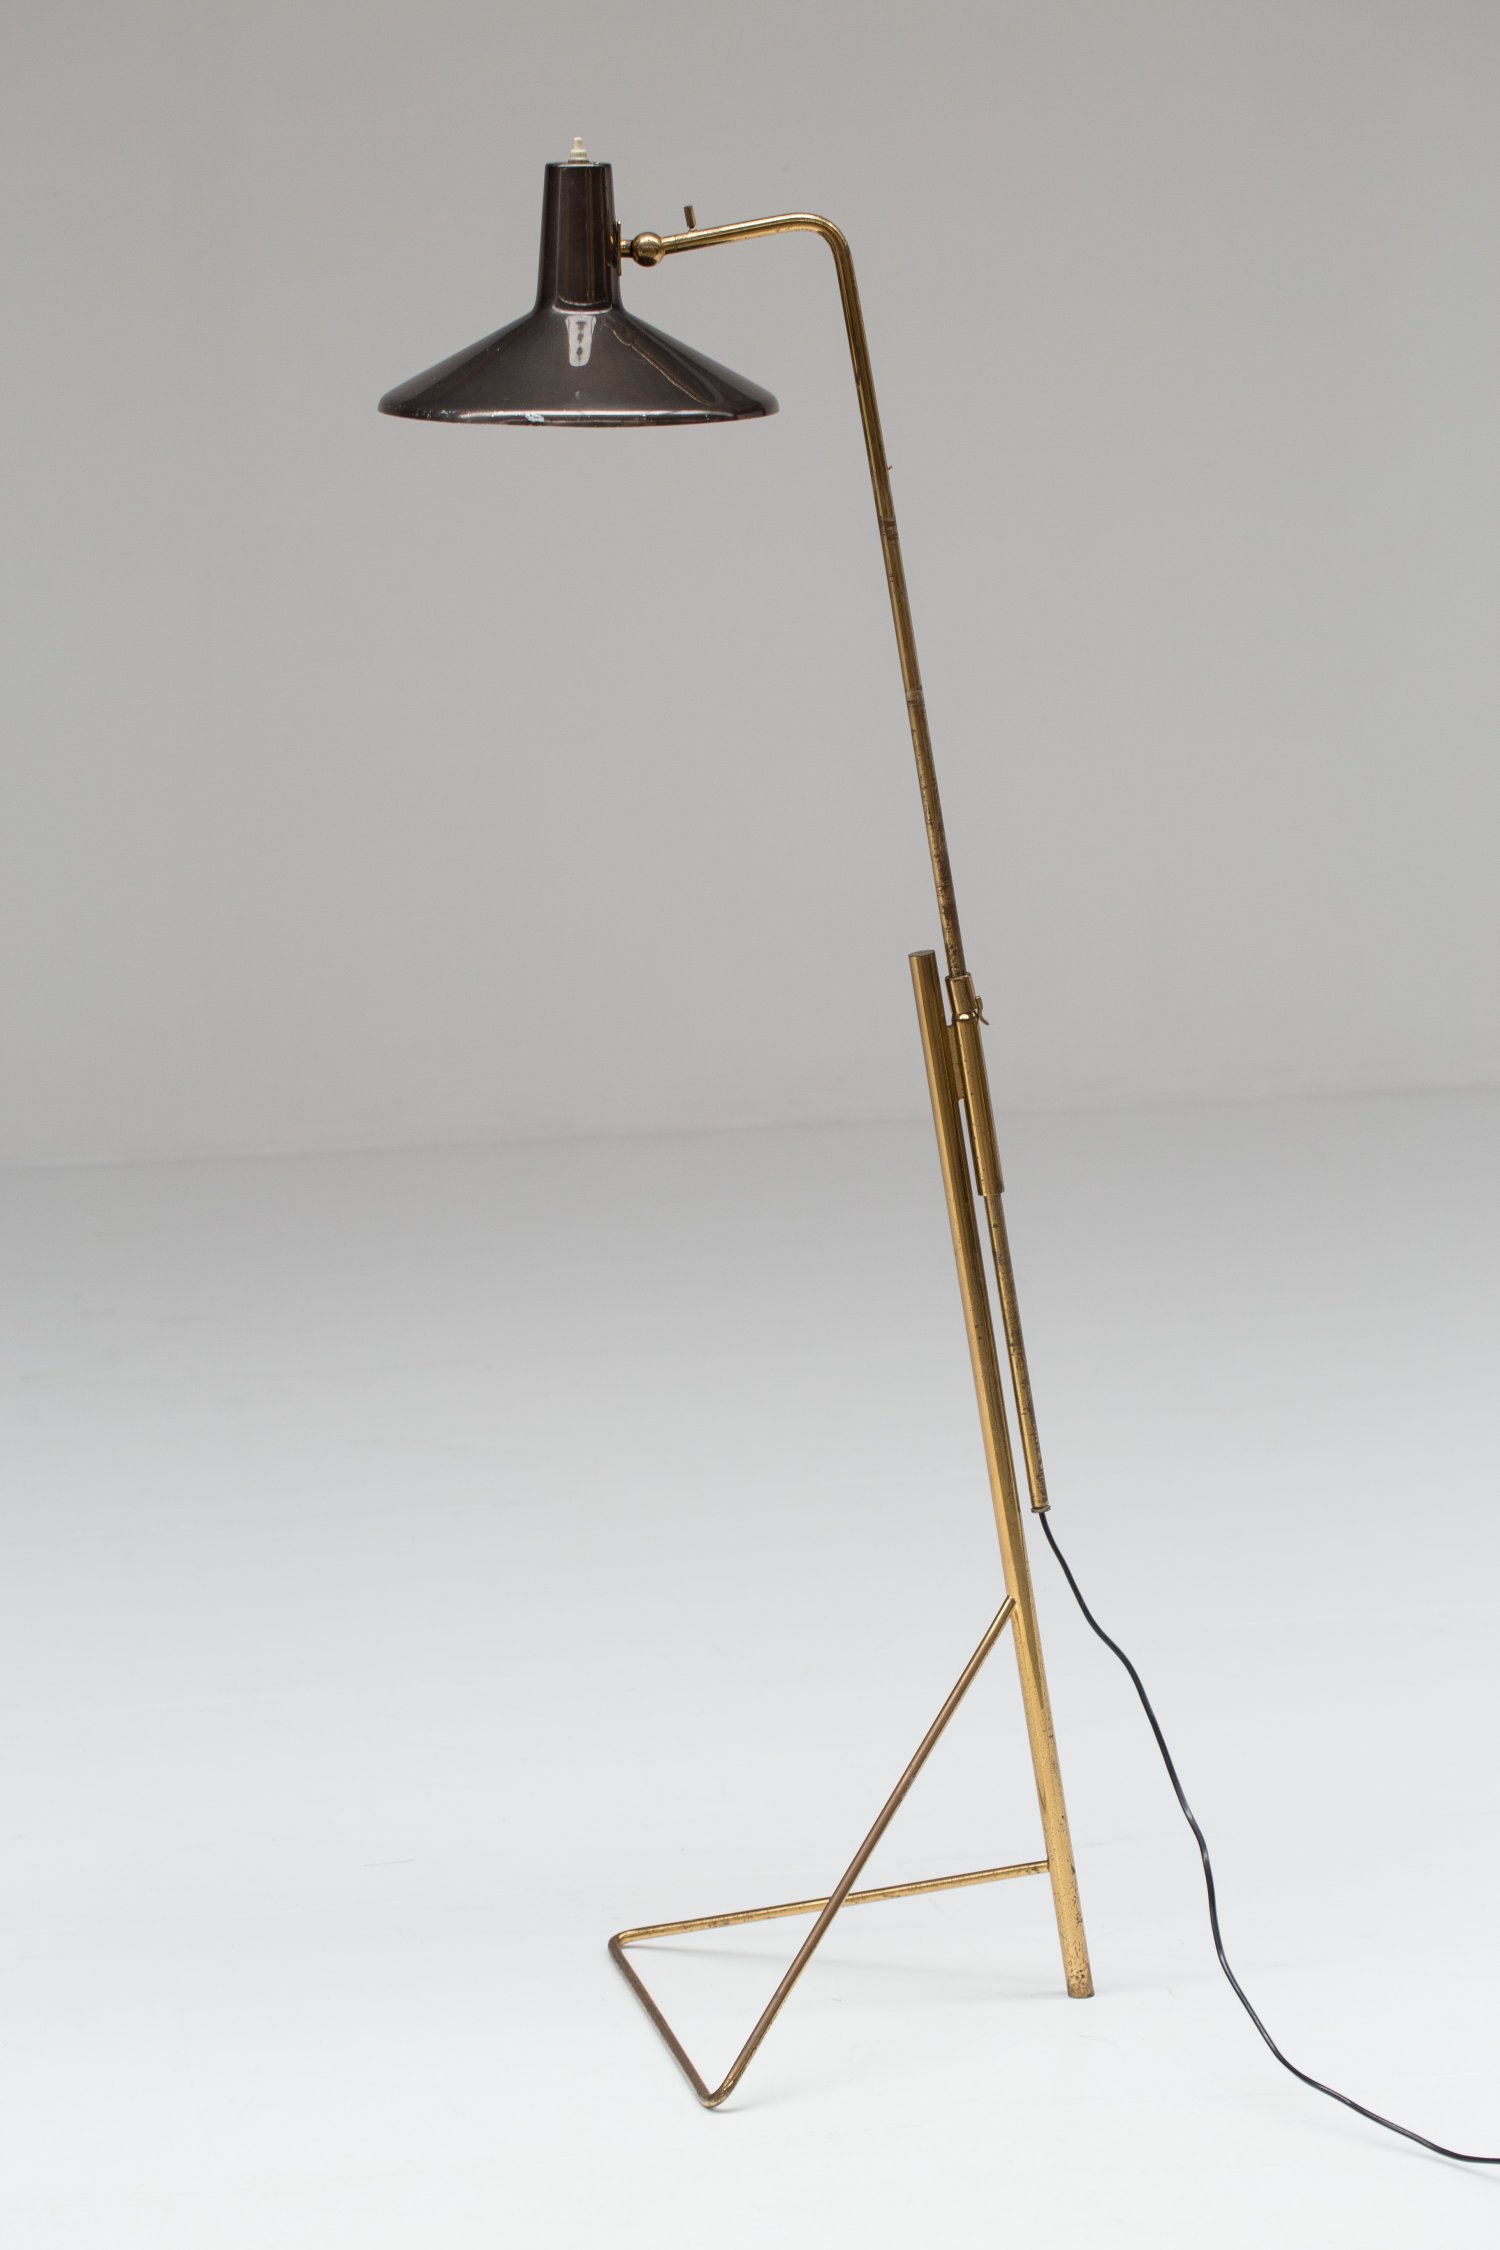 Model 1045 by Gino Sarfatti for Arteluce